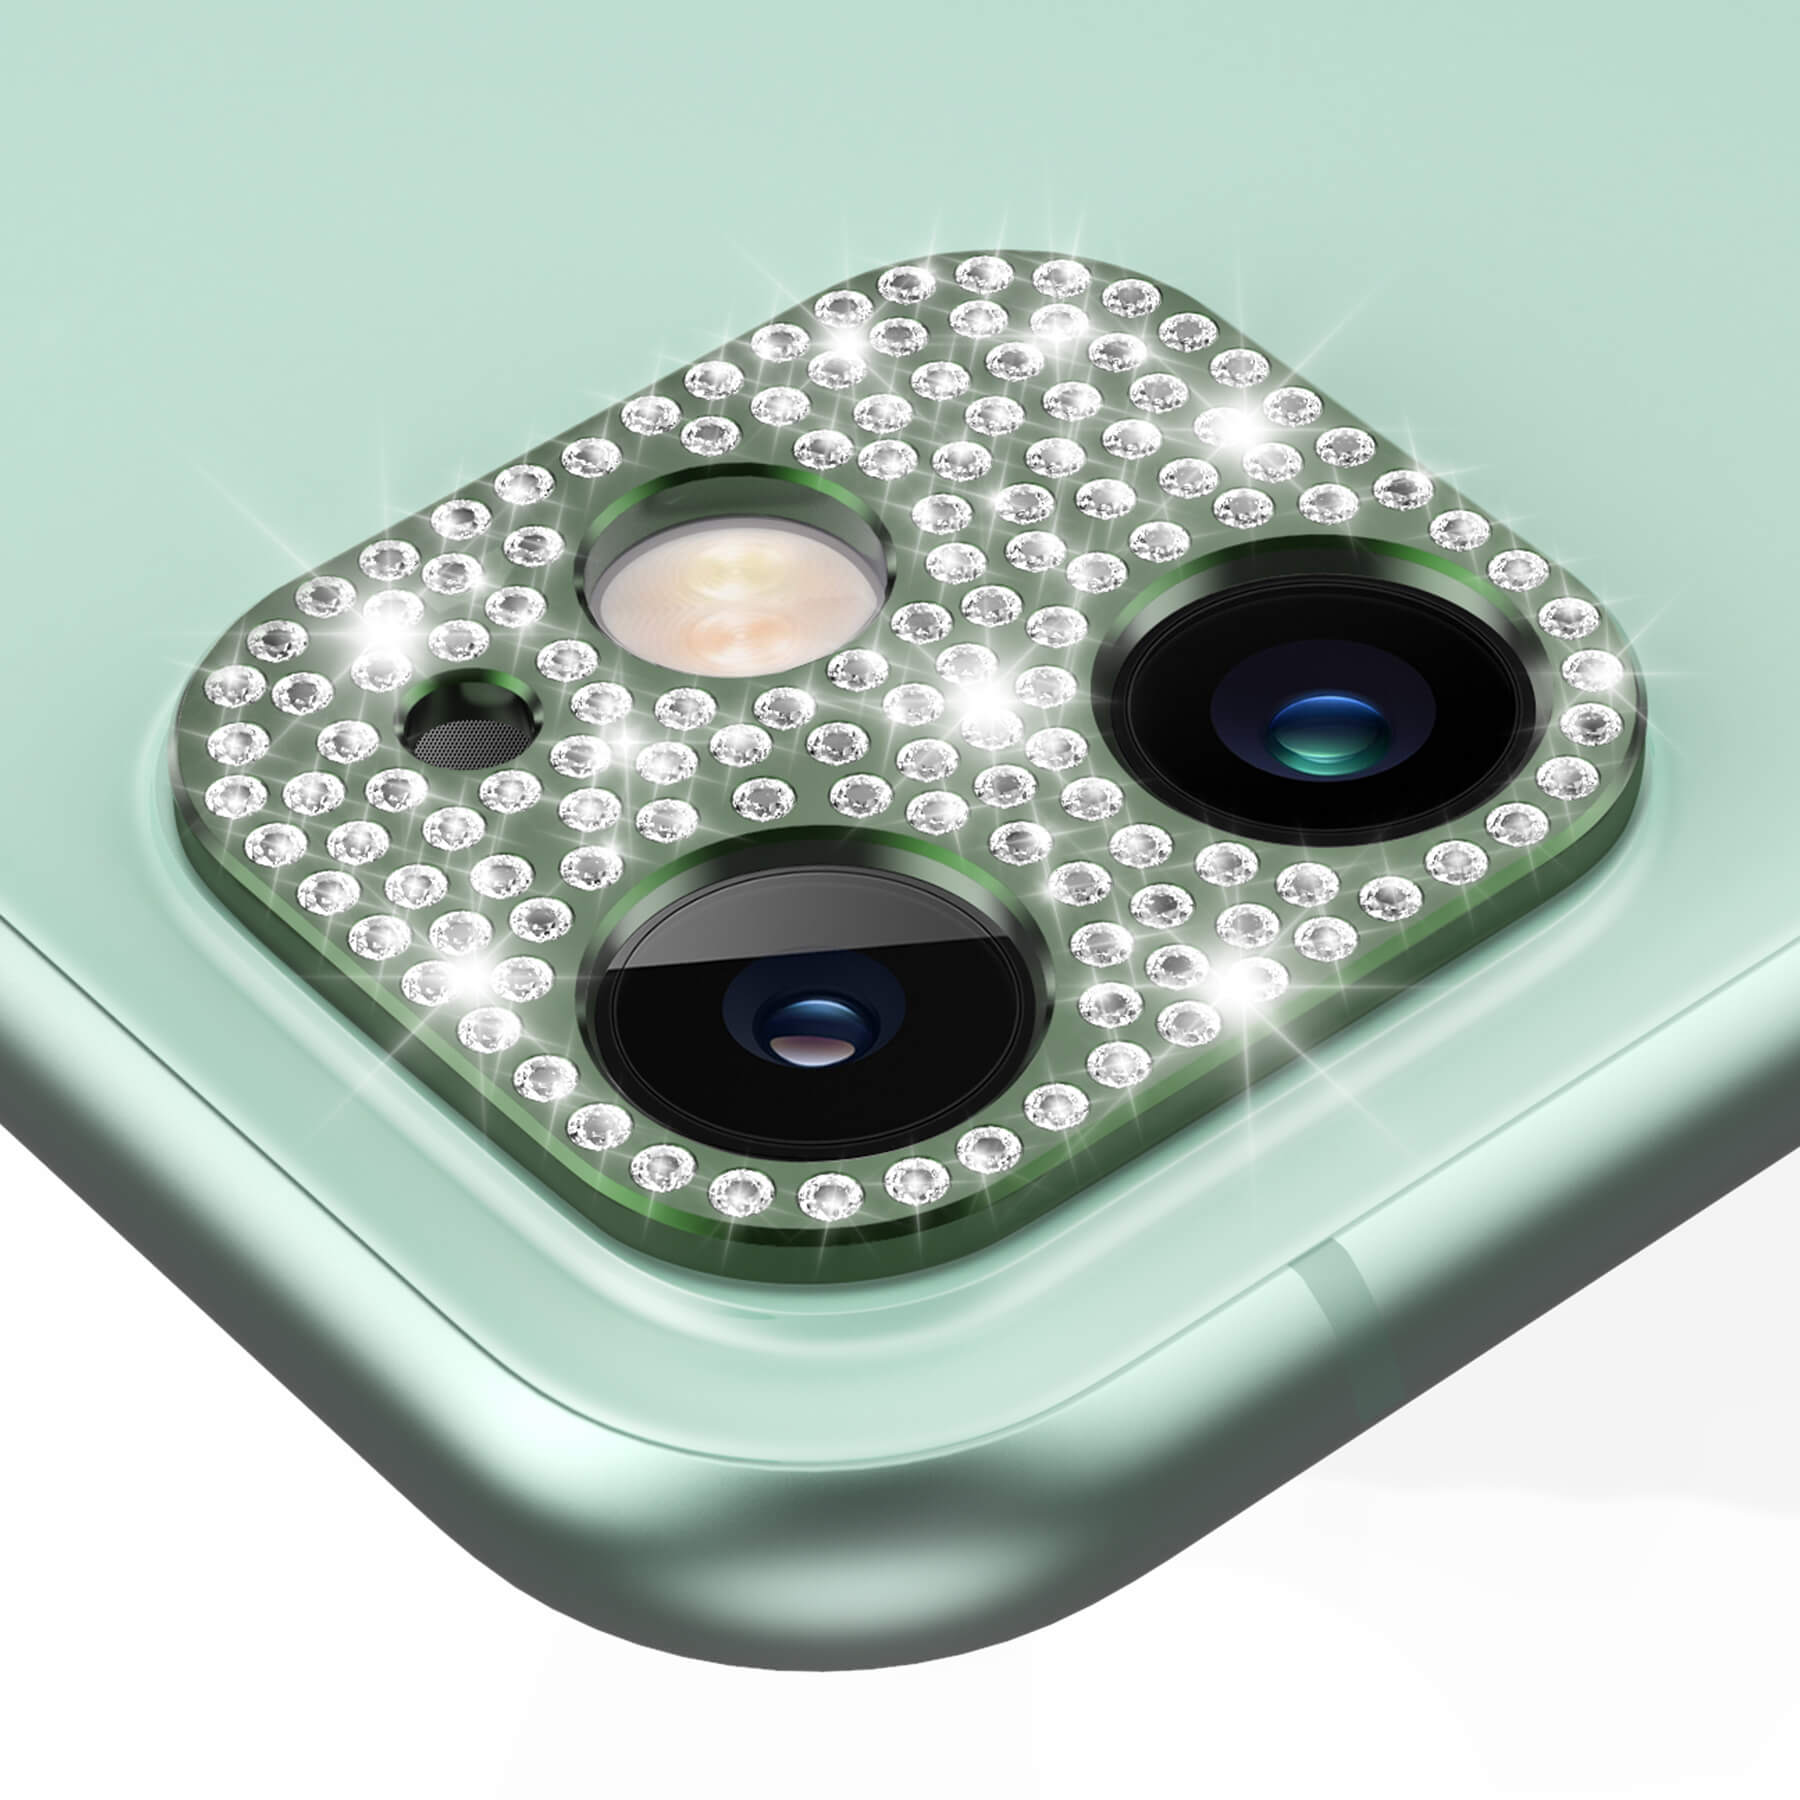 bling diamond iPhone 11 camera lens protector - alpine green